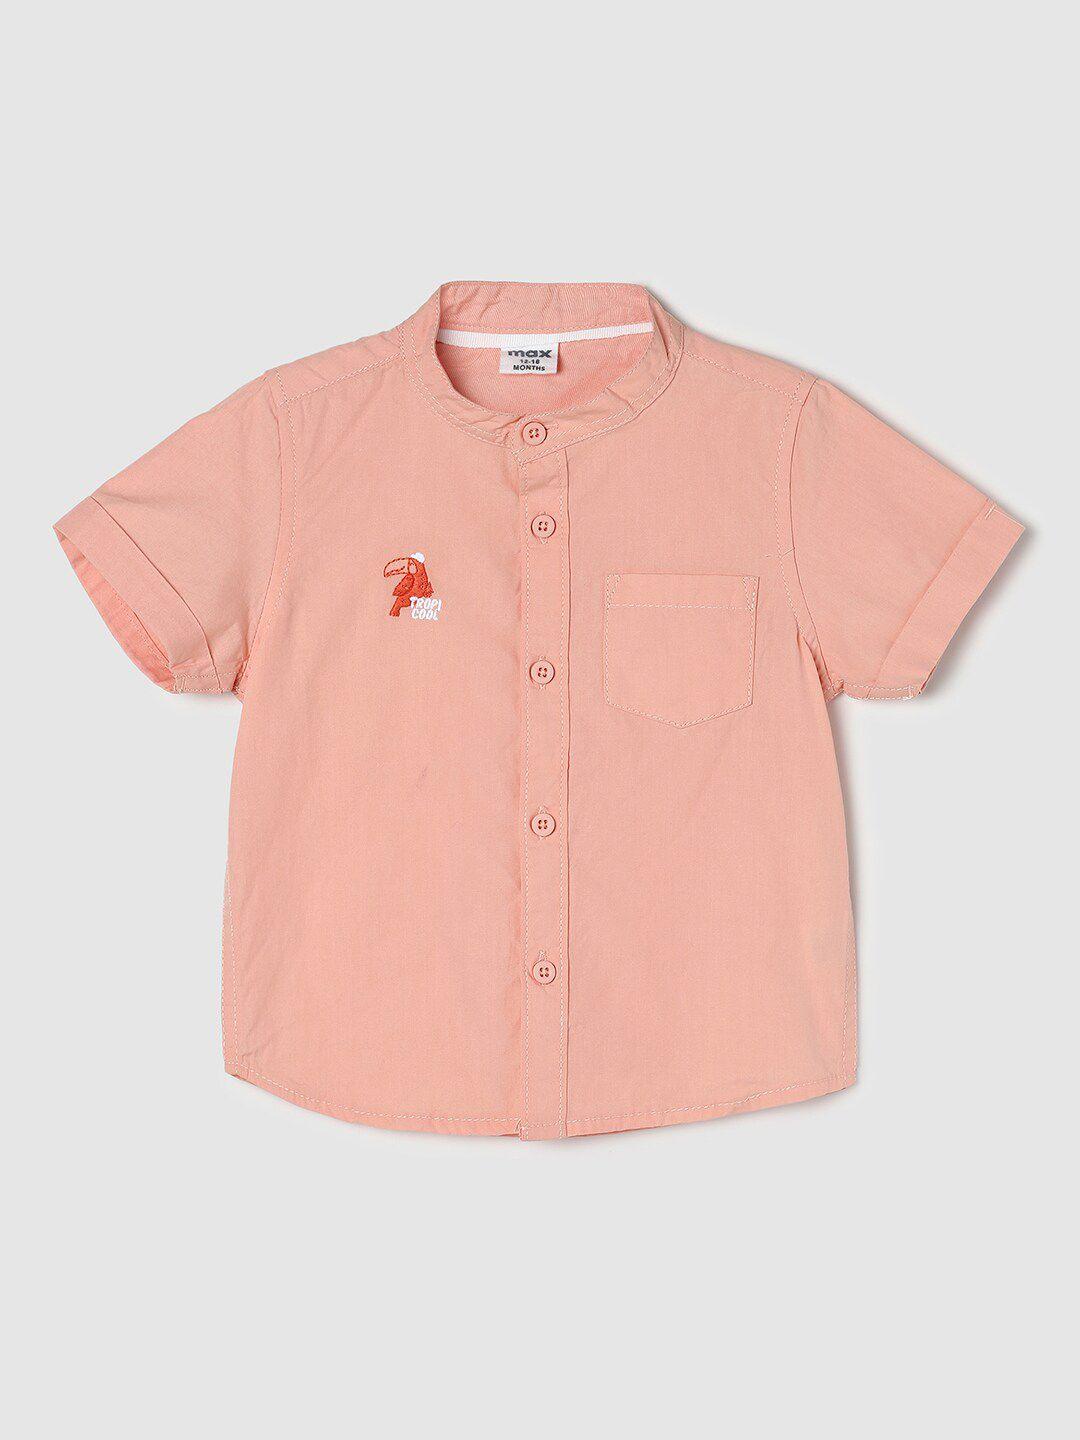 max-infant-boys-mandarin-collar-cotton-casual-shirt